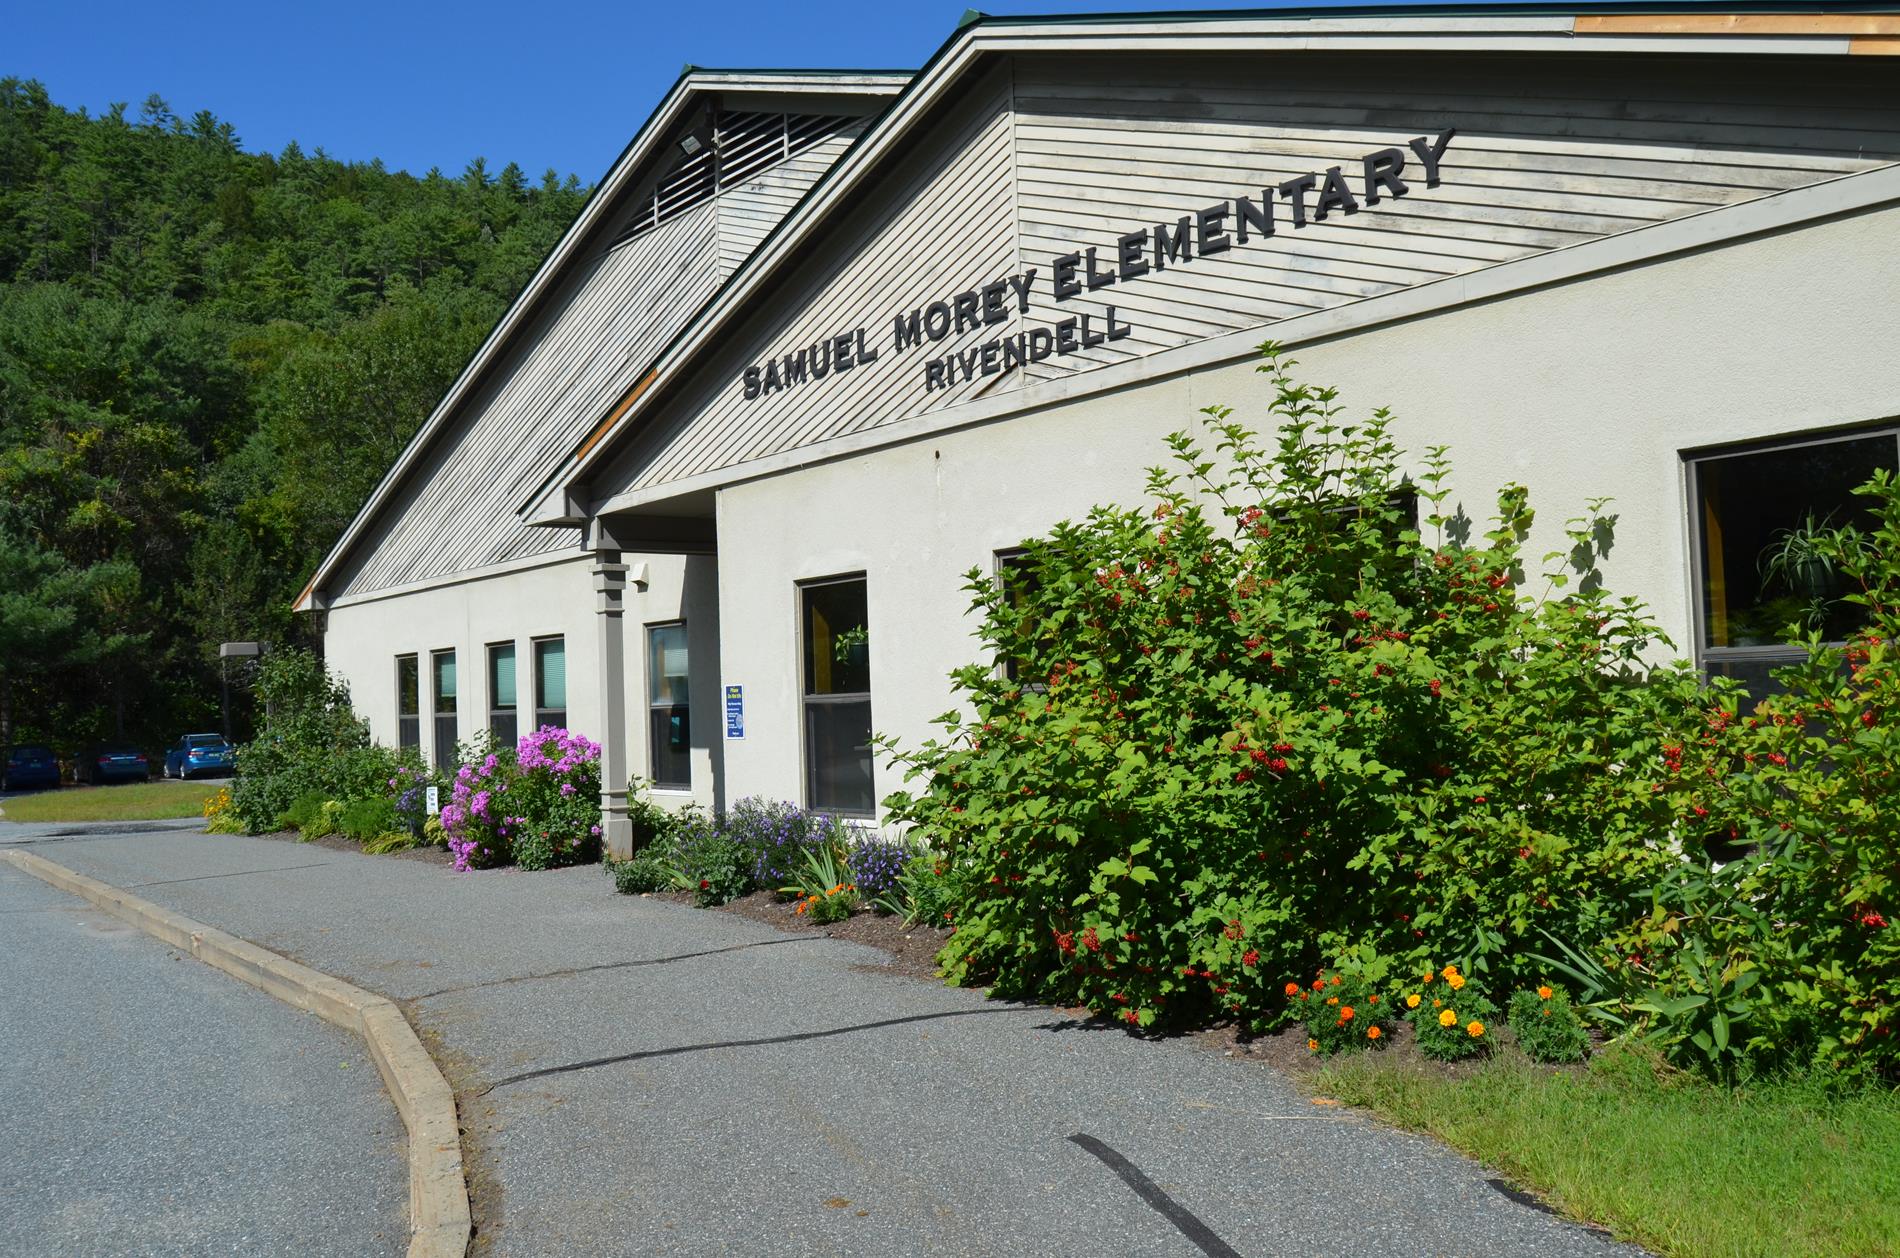 Samuel Morey Elementary School